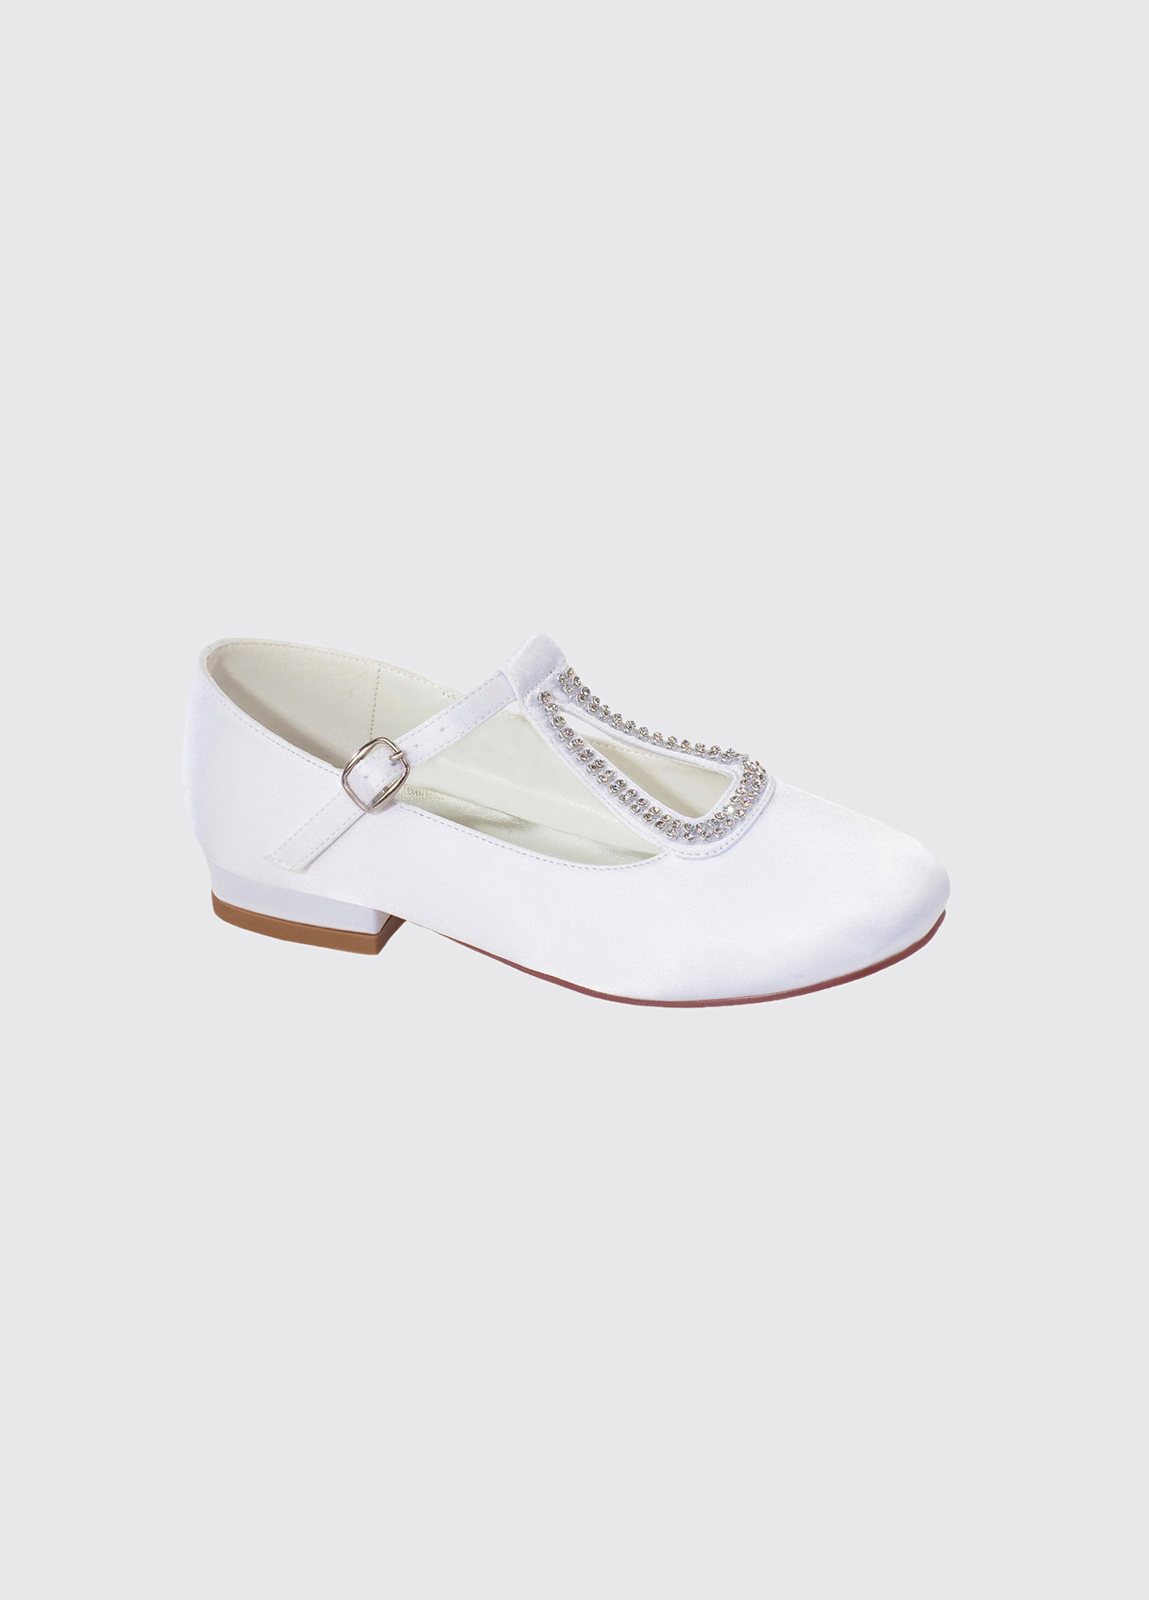 Trista Communion Shoe - White Satin